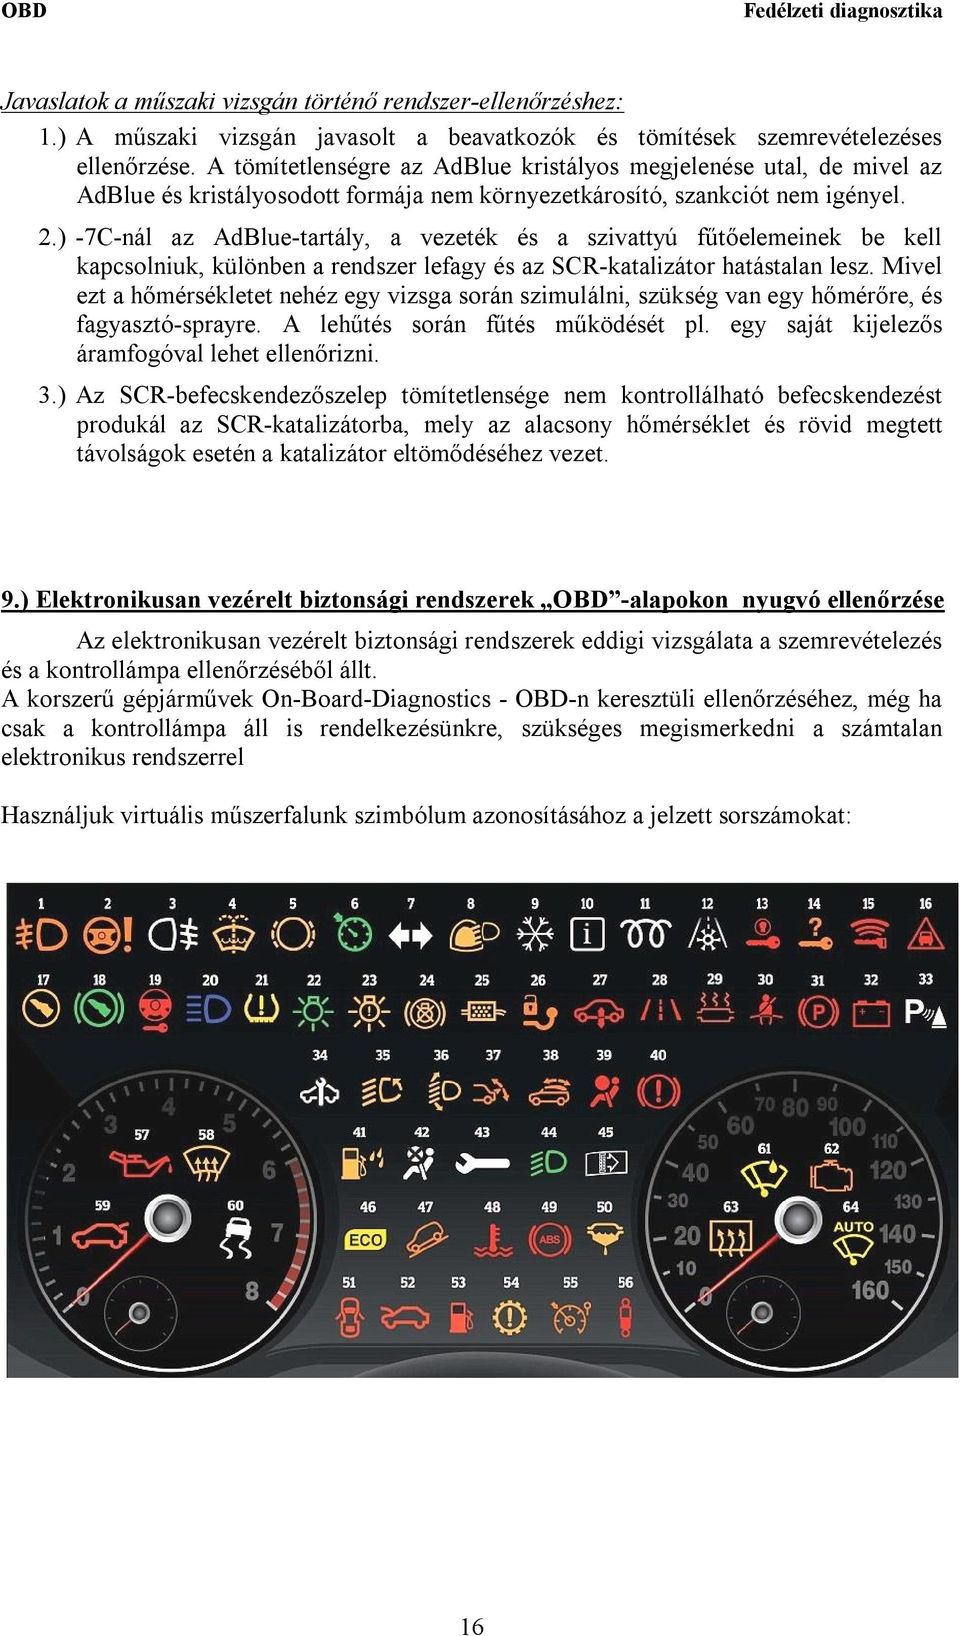 Fiat Hibakod Tablazat Jarmu Specifikaciok